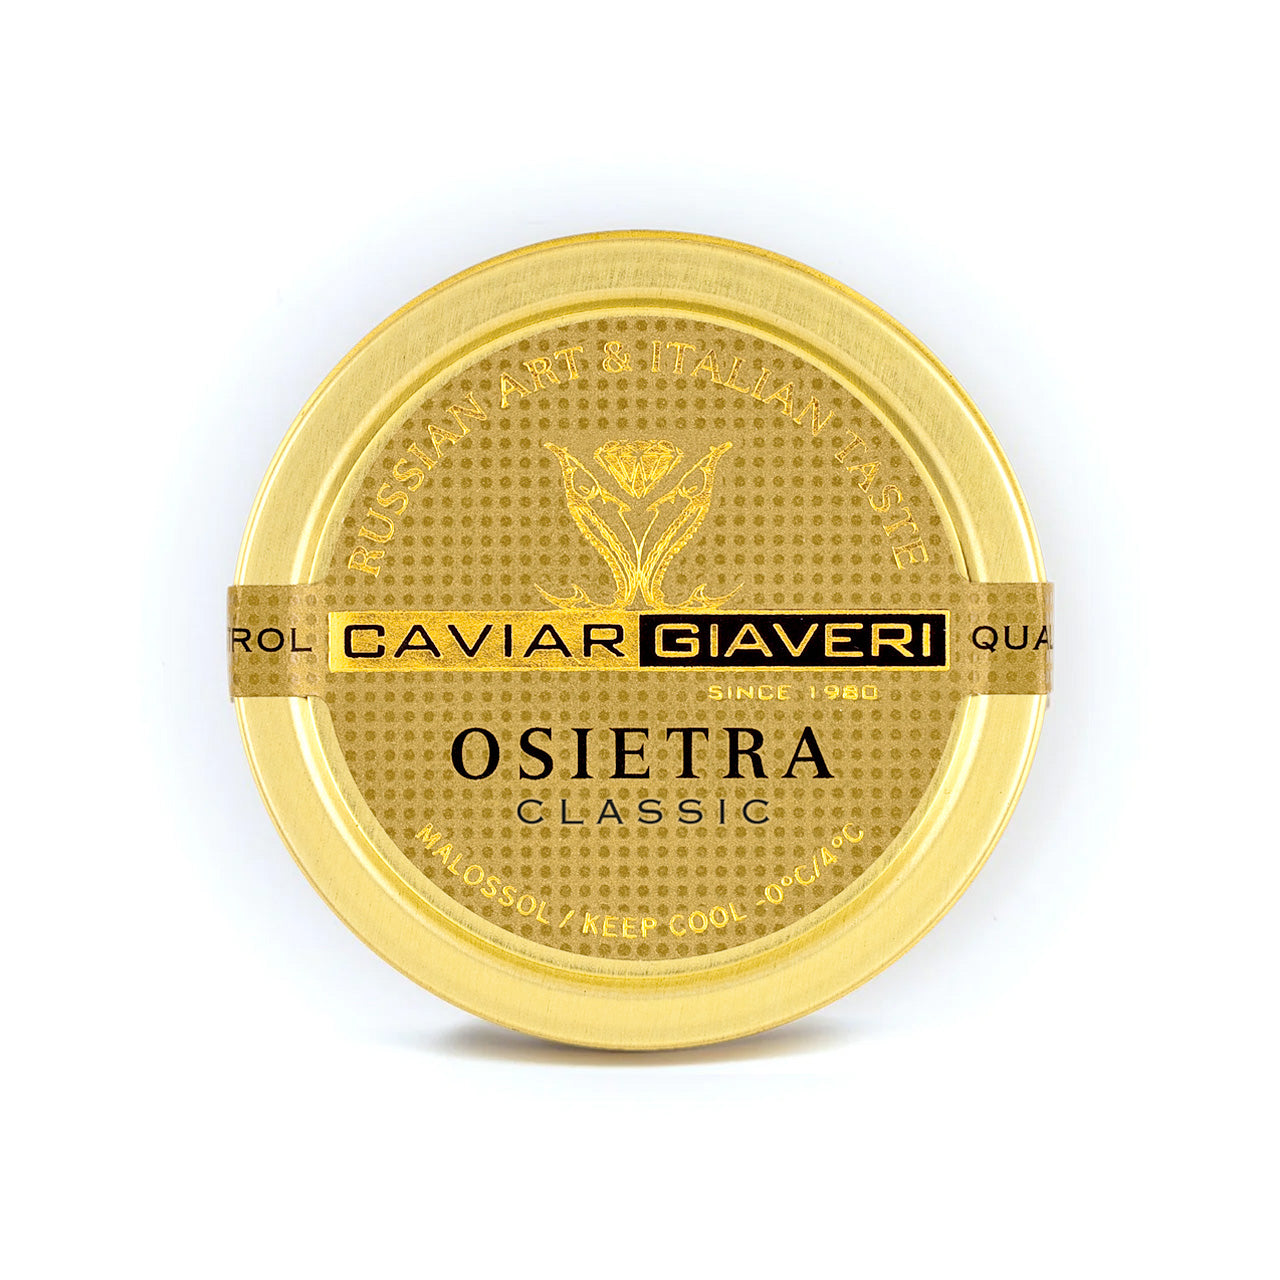 100g Osietra Classic